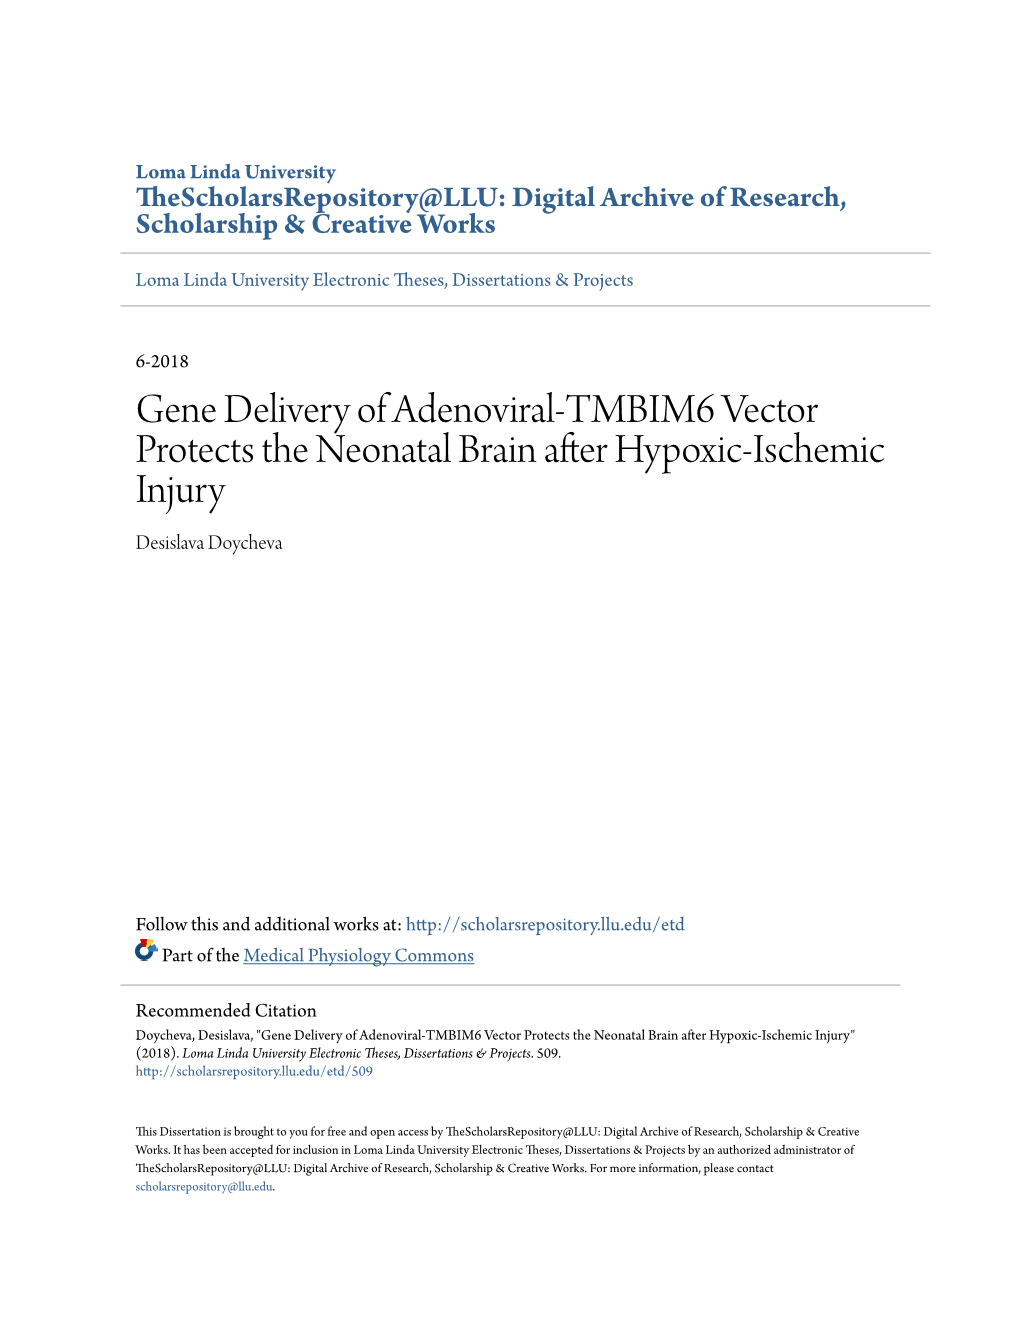 Gene Delivery of Adenoviral-TMBIM6 Vector Protects the Neonatal Brain After Hypoxic-Ischemic Injury Desislava Doycheva